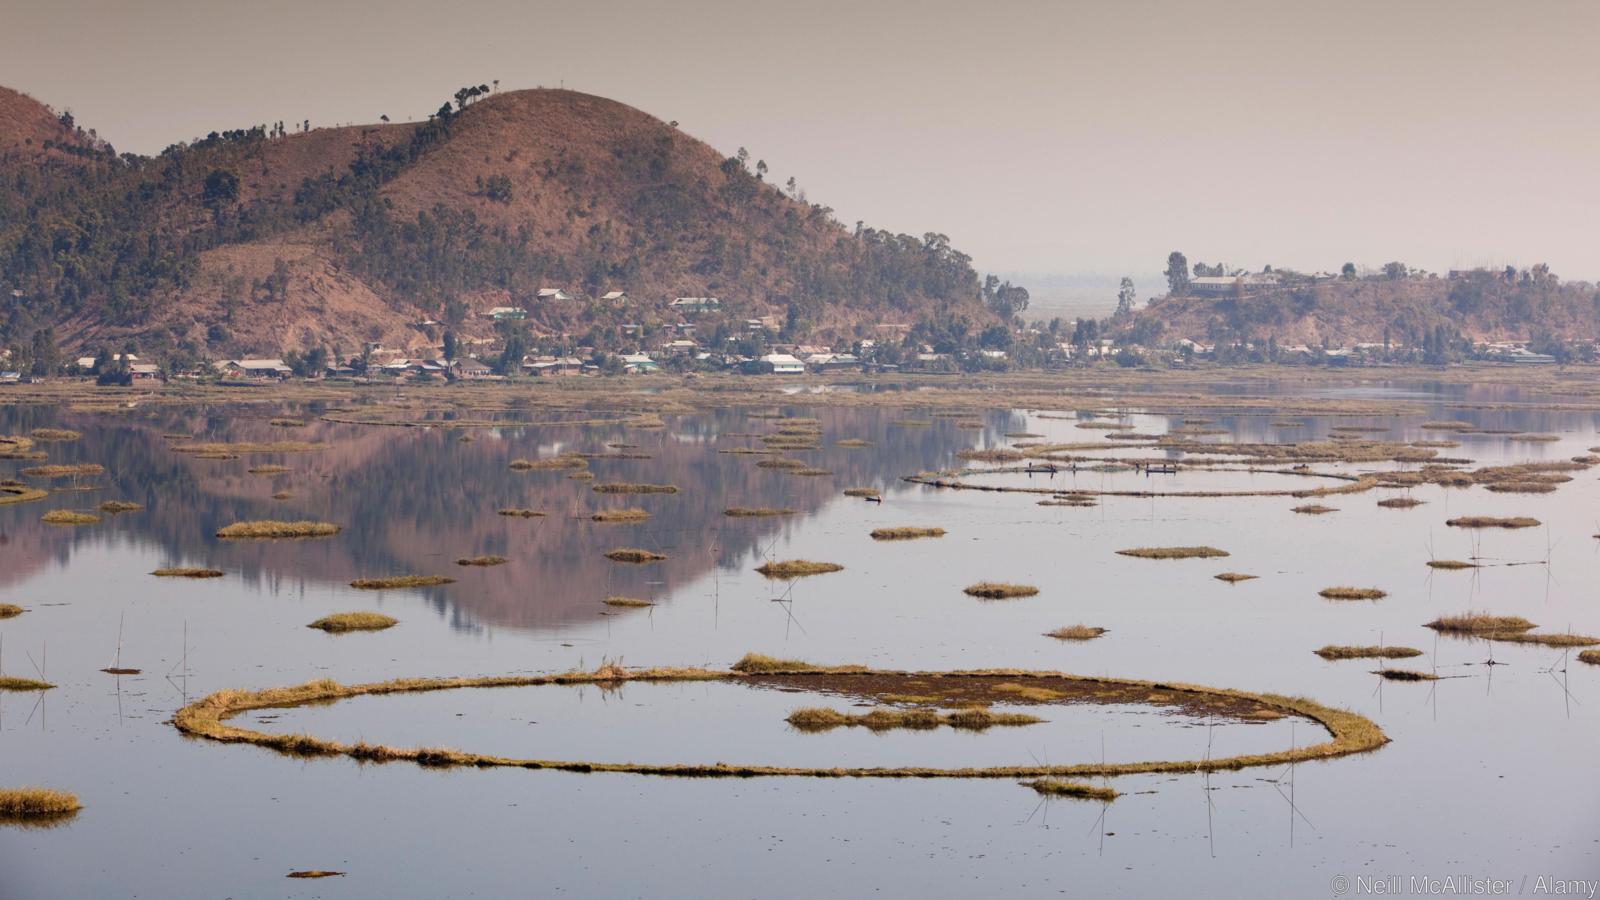 India, Manipur, Imphal, Loktak Lake, circular floating islands crated from water hyacinth weeds